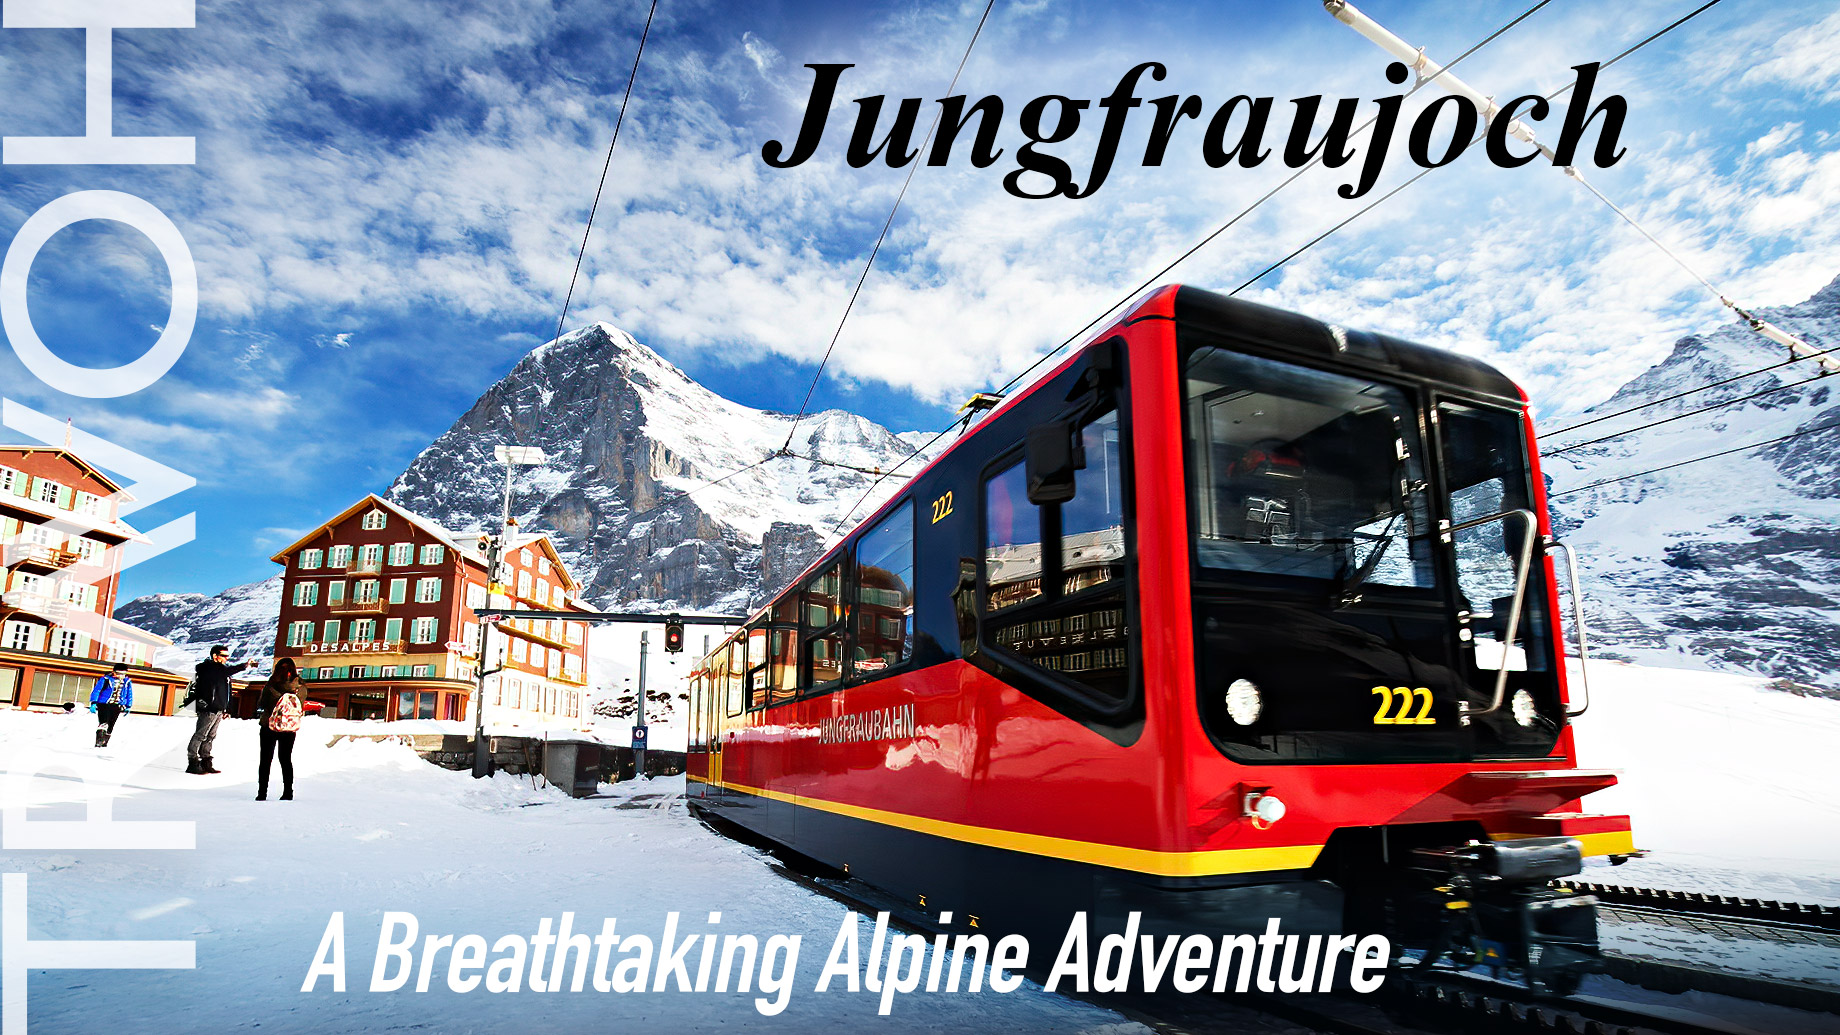 Jungfraujoch: A Breathtaking Alpine Adventure